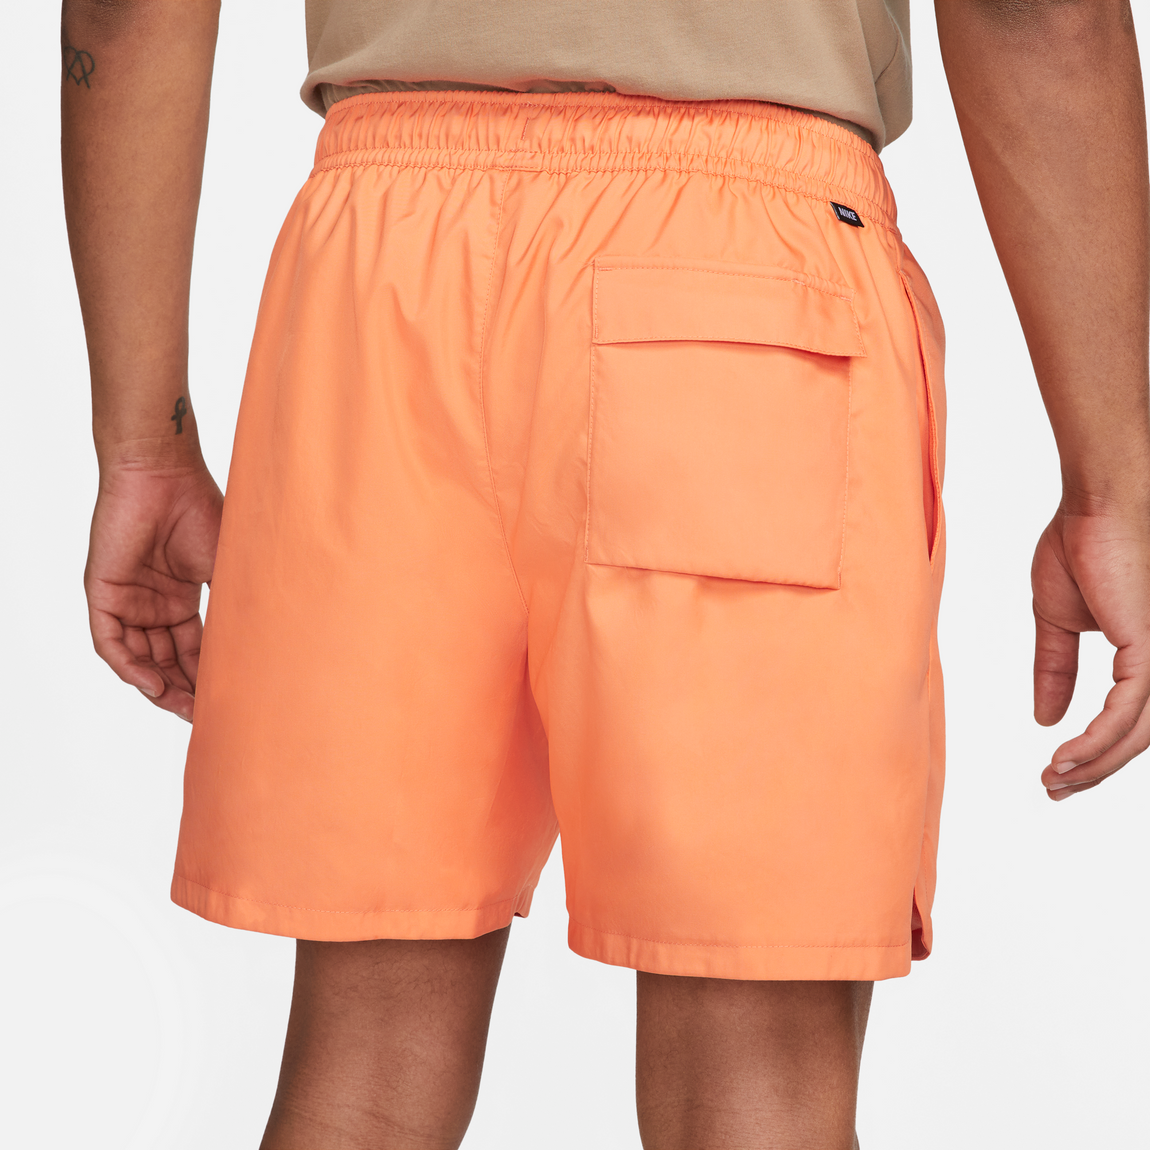 Nike Sportswear Sport Essentials Shorts (Kumquat/White) - Nike Sportswear Sport Essentials Shorts (Kumquat/White) - 